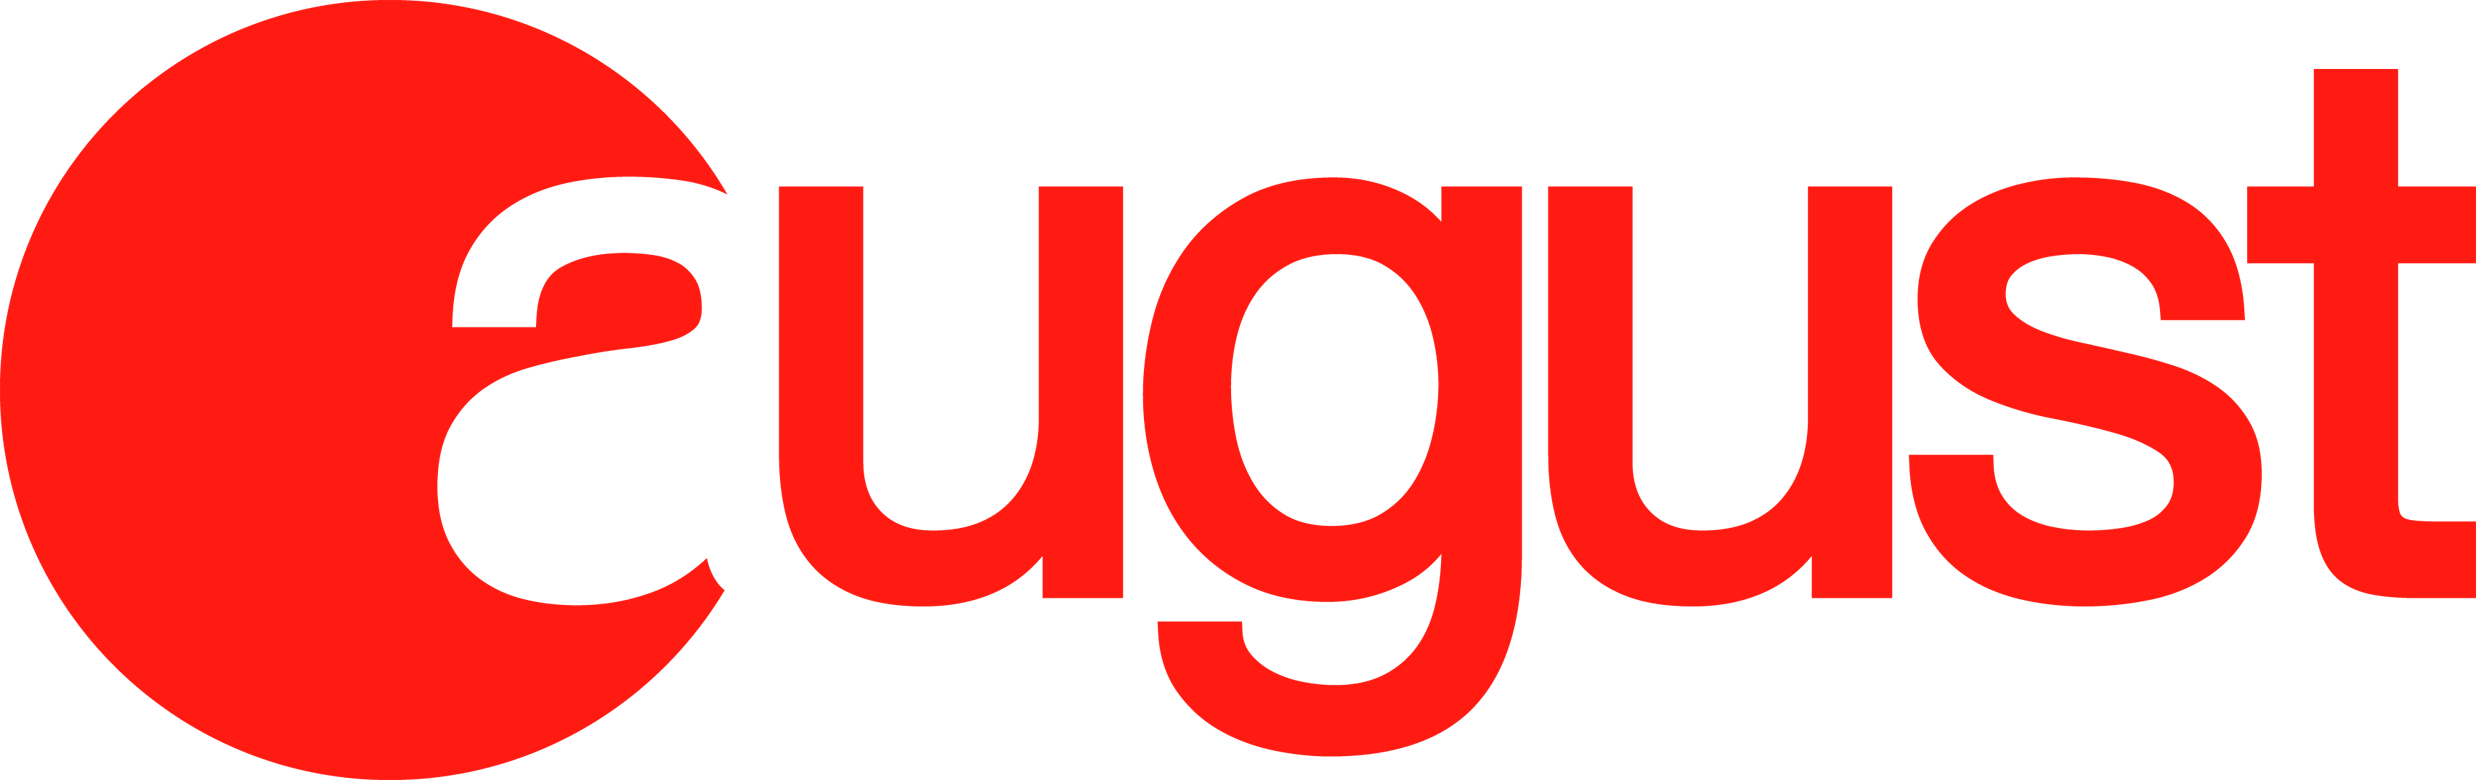 AugustLogoLarge